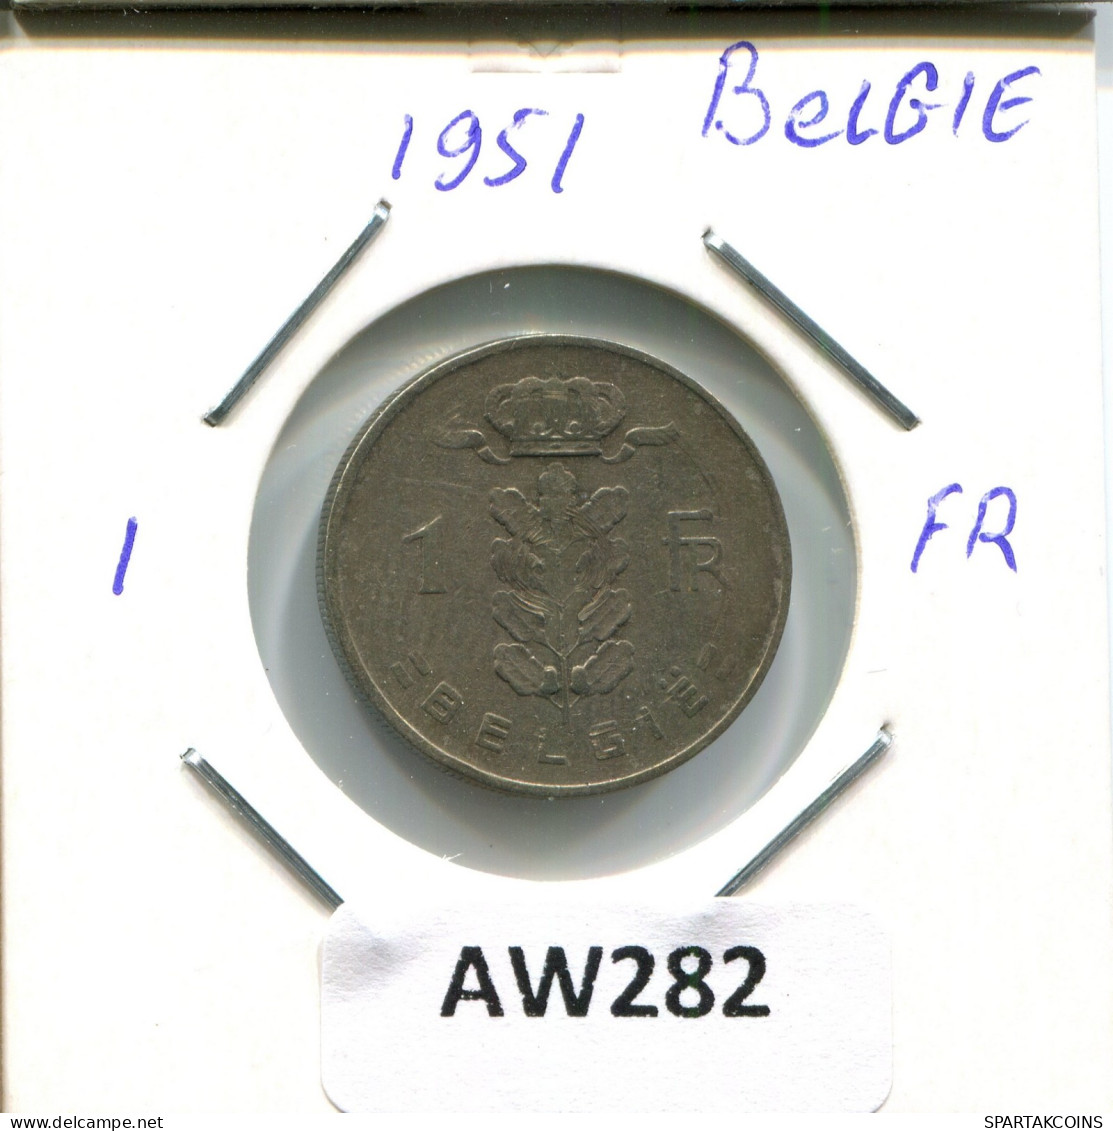 1 FRANC 1951 DUTCH Text BELGIUM Coin #AW282.U.A - 1 Franc